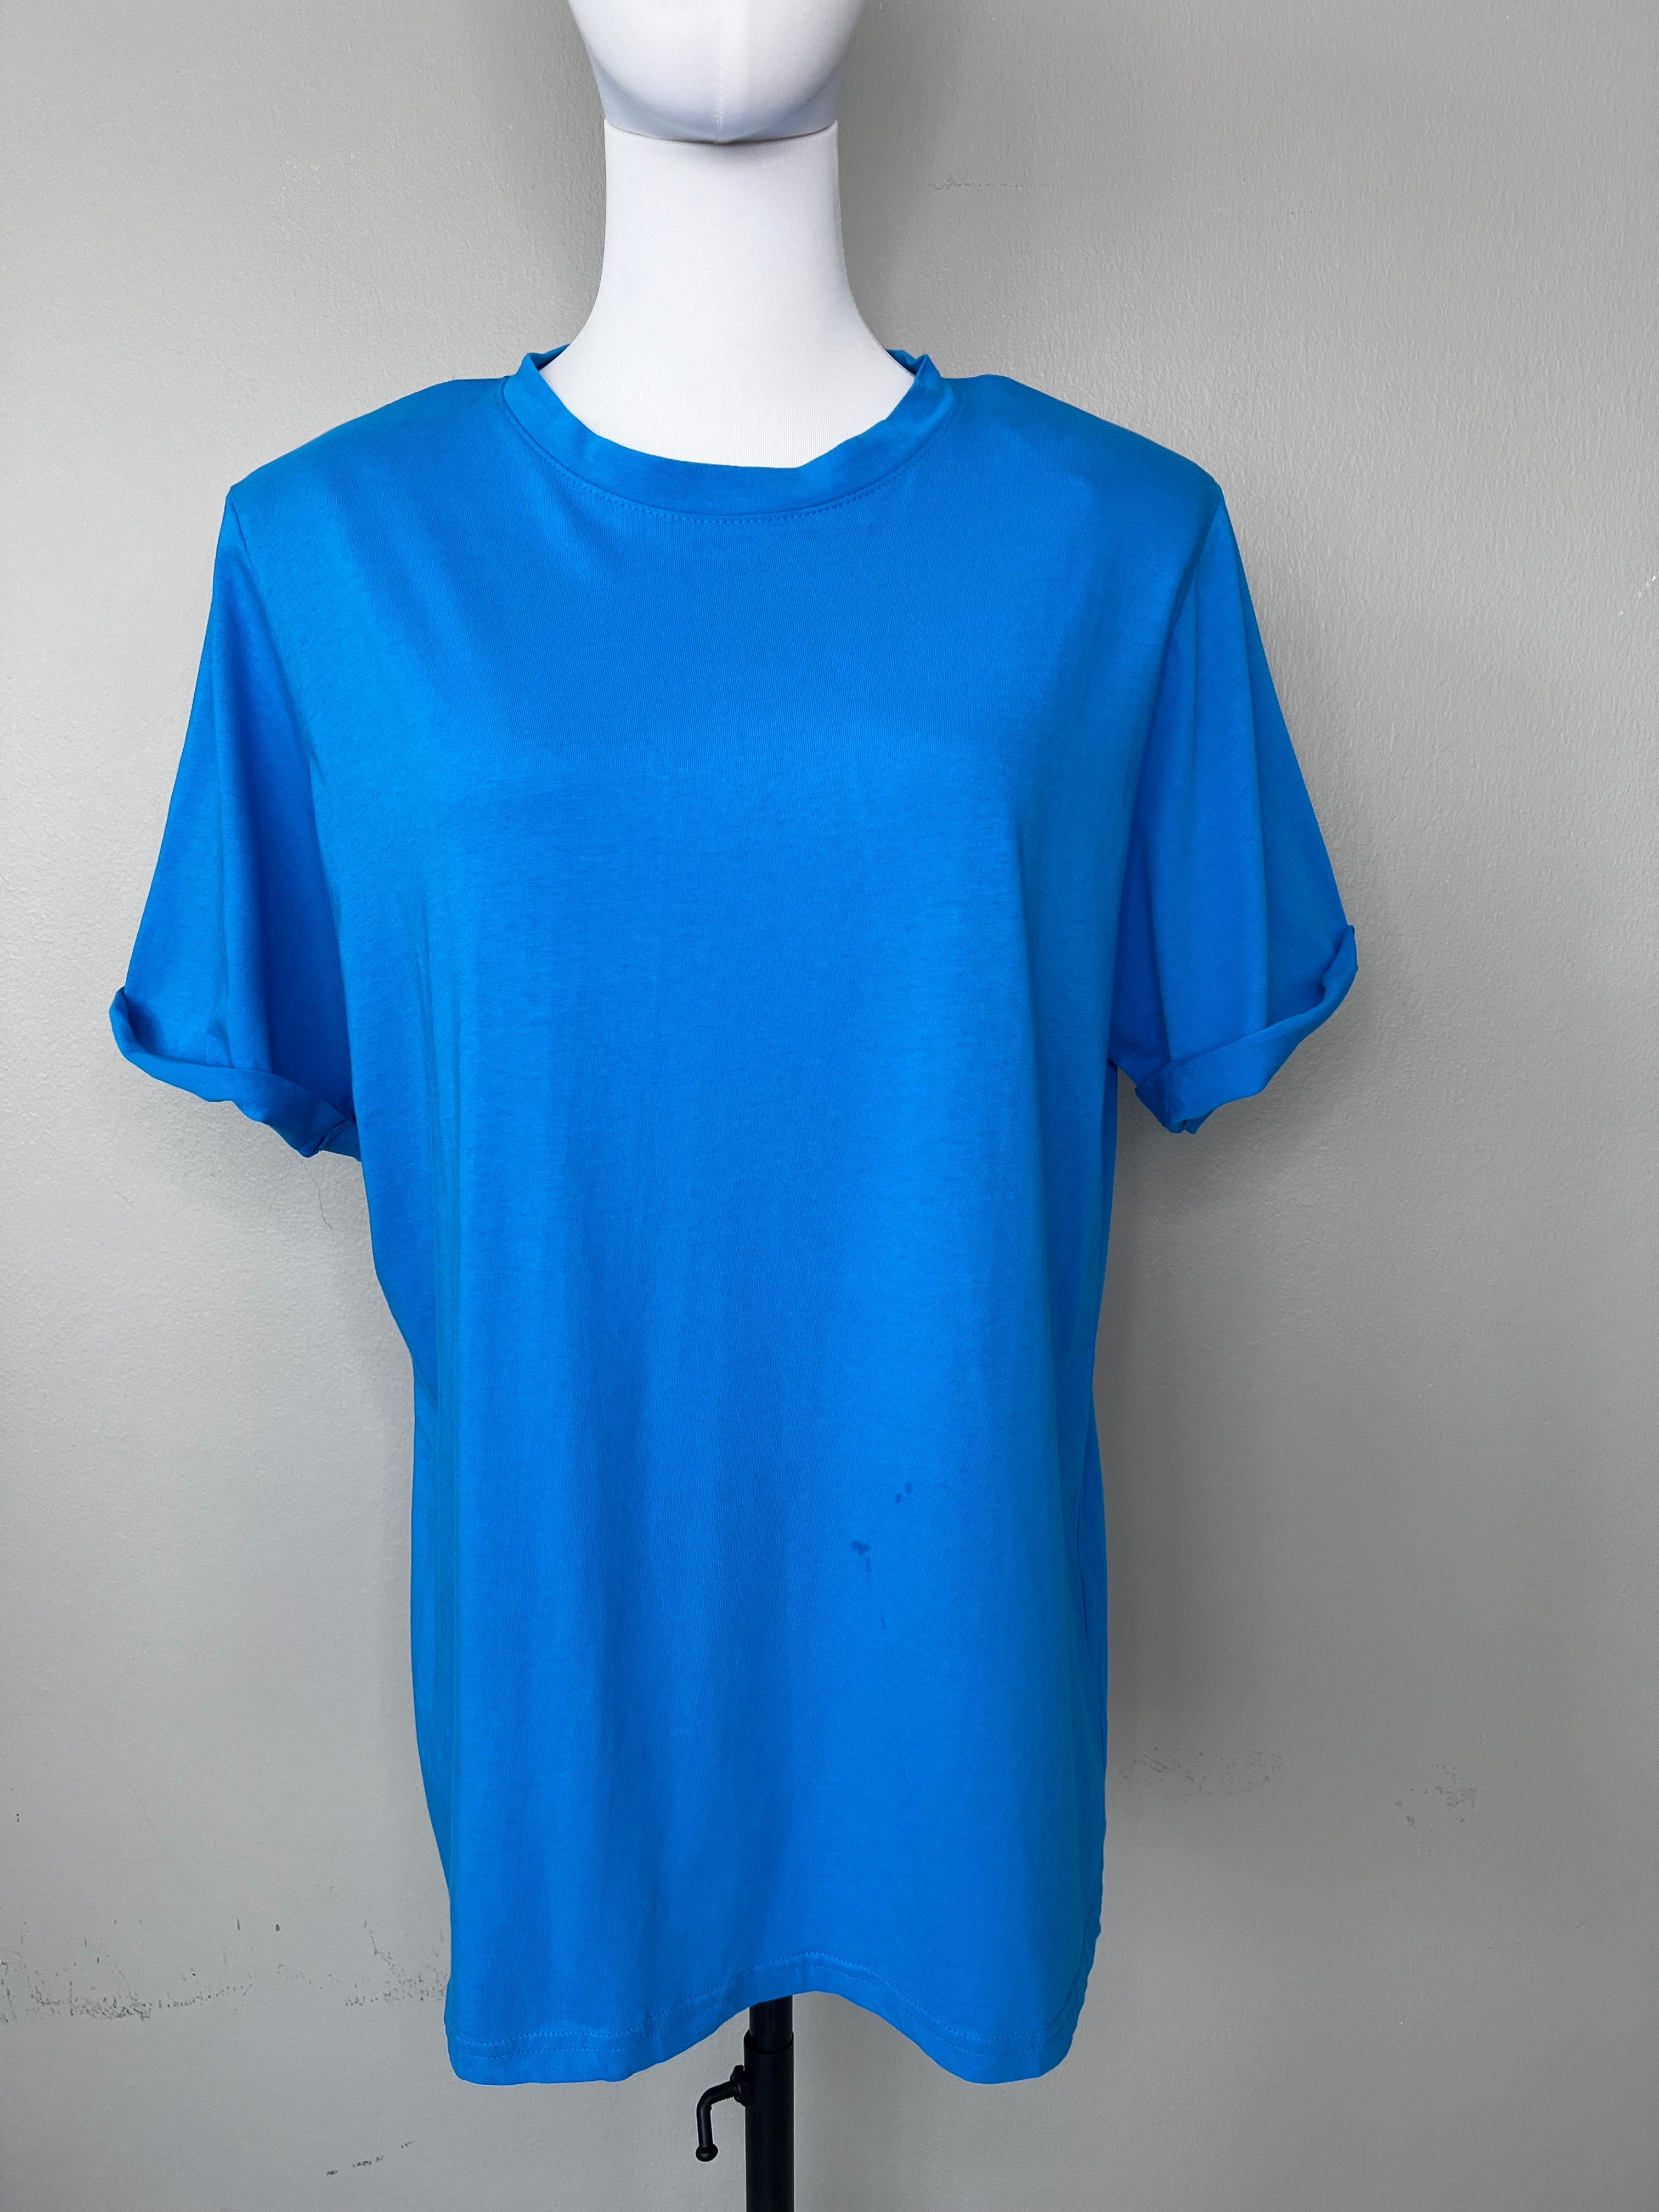 Plain dark blue t-shirt with shoulder pads - THE FRANKIE SHOP